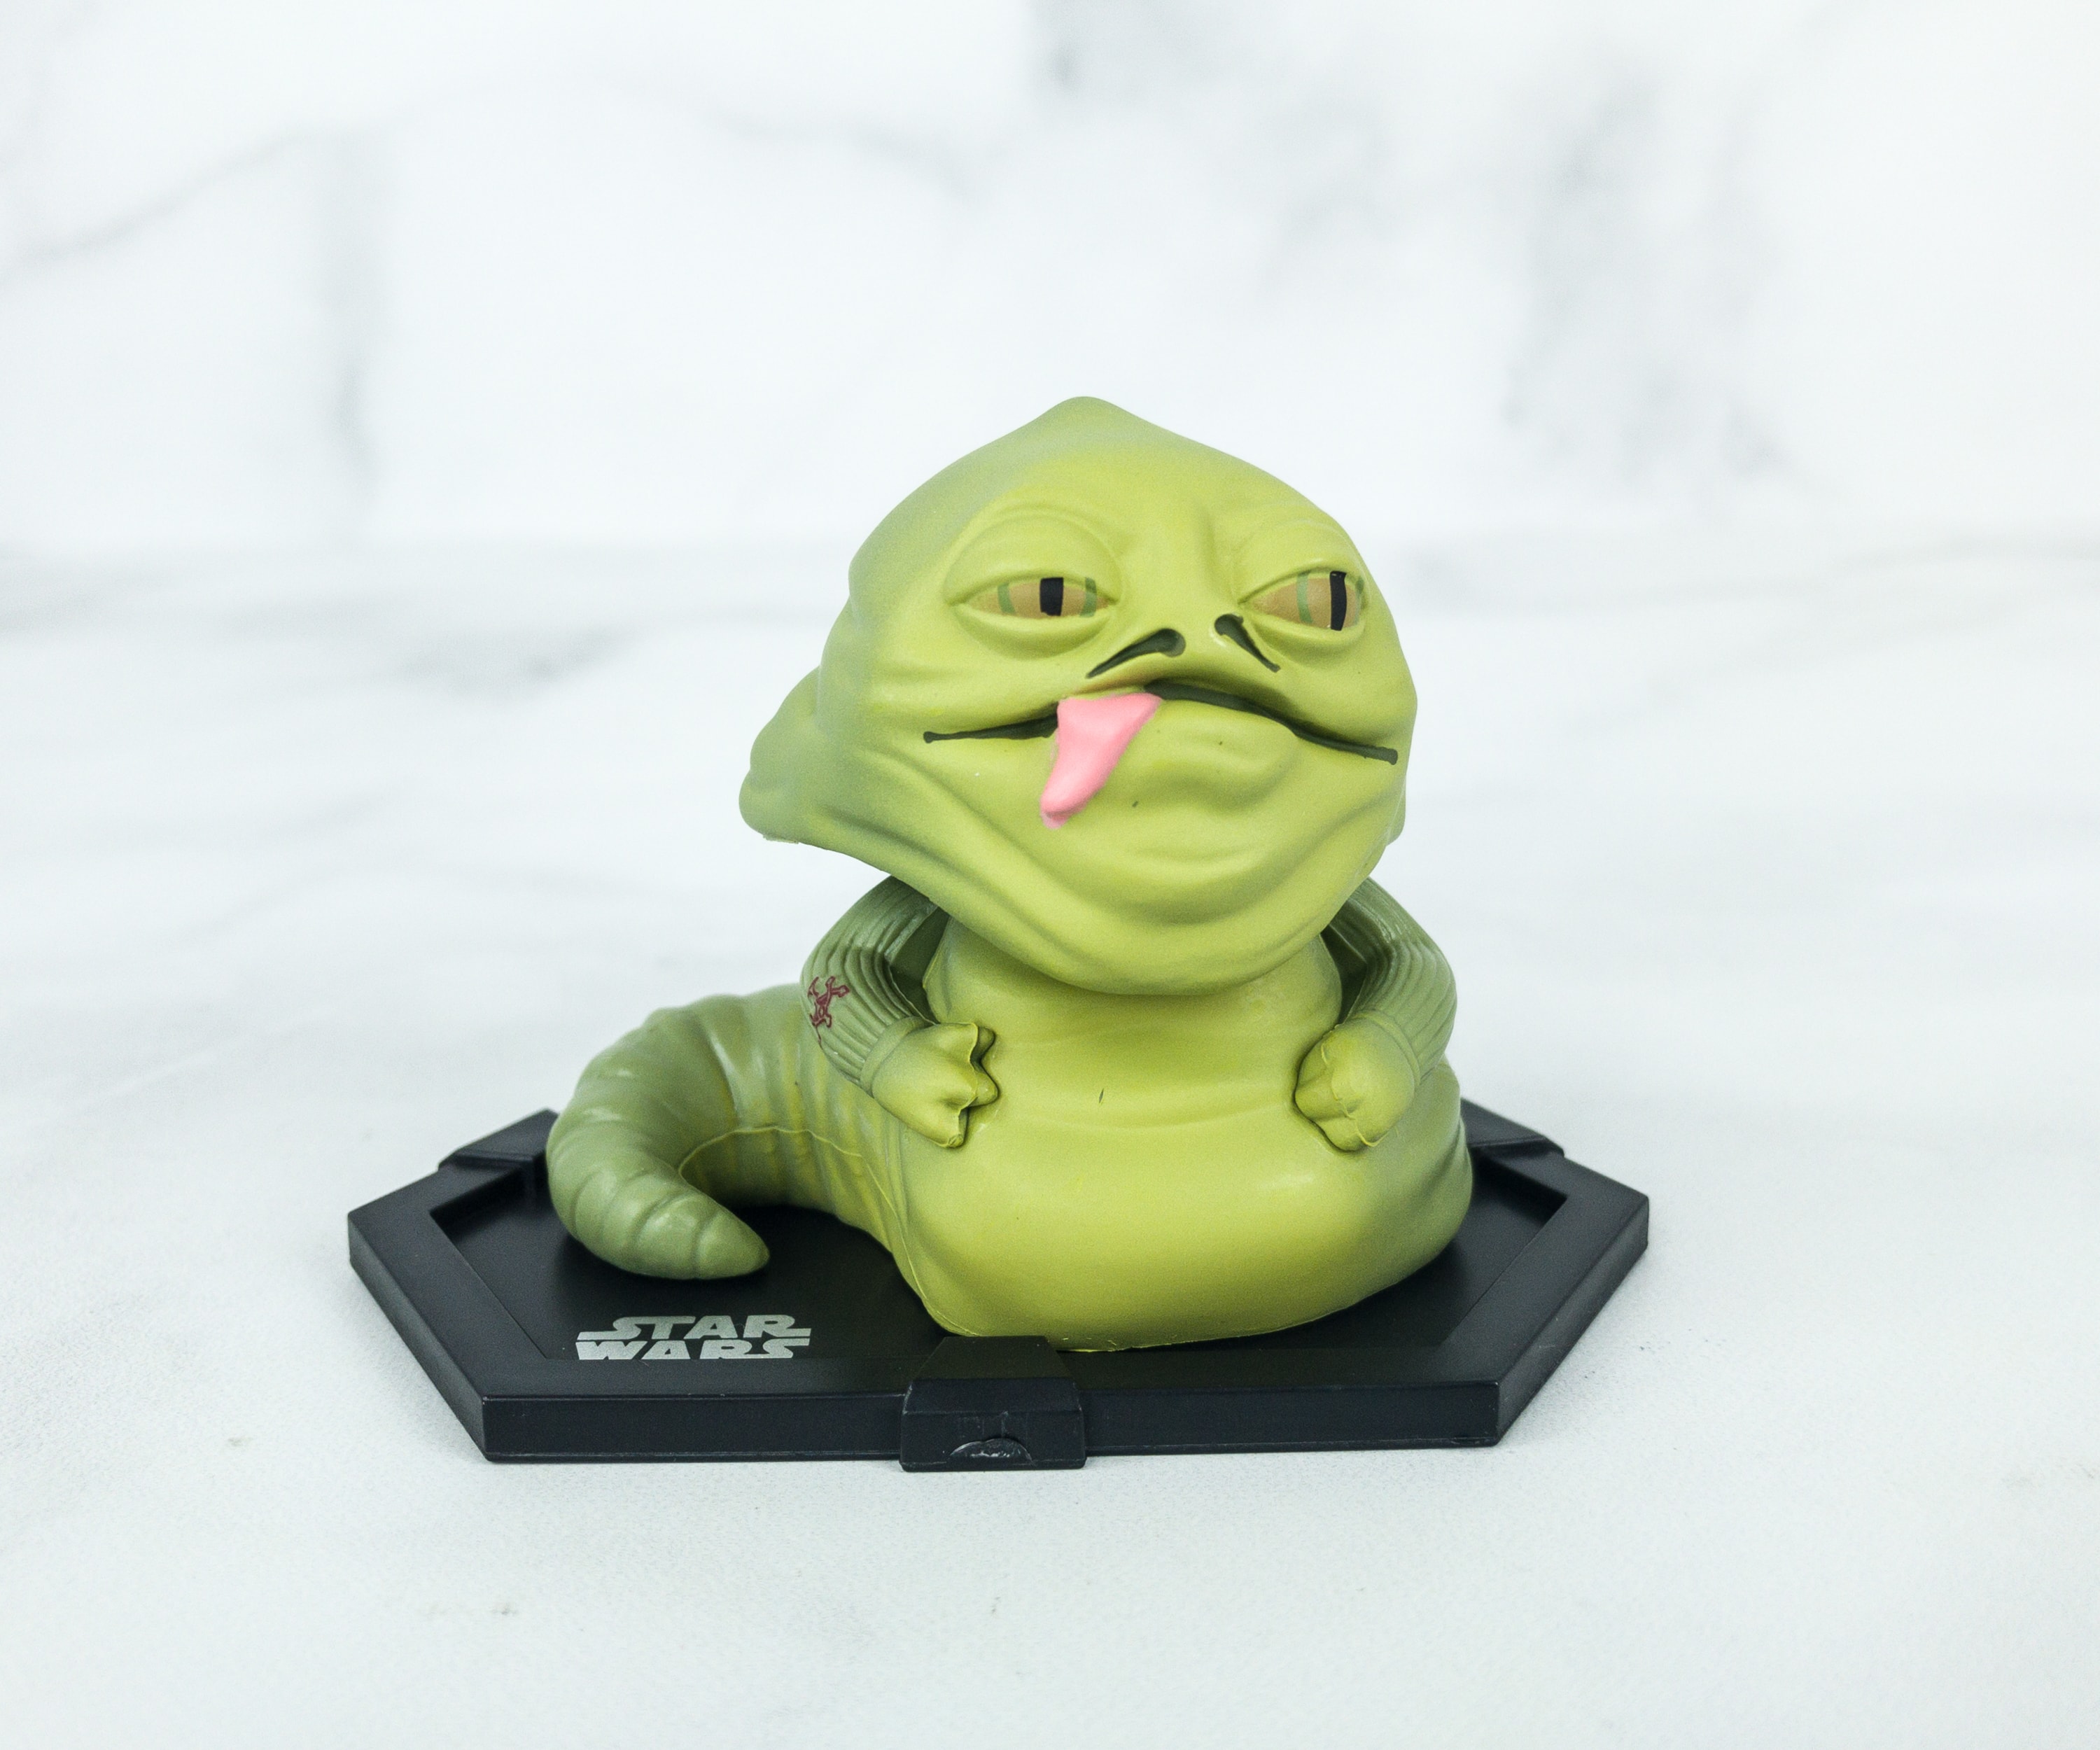 Star Wars Jabba The Hutt Funko Mystery Minis & R2d2 Salacious Crumb Shot Glass for sale online 